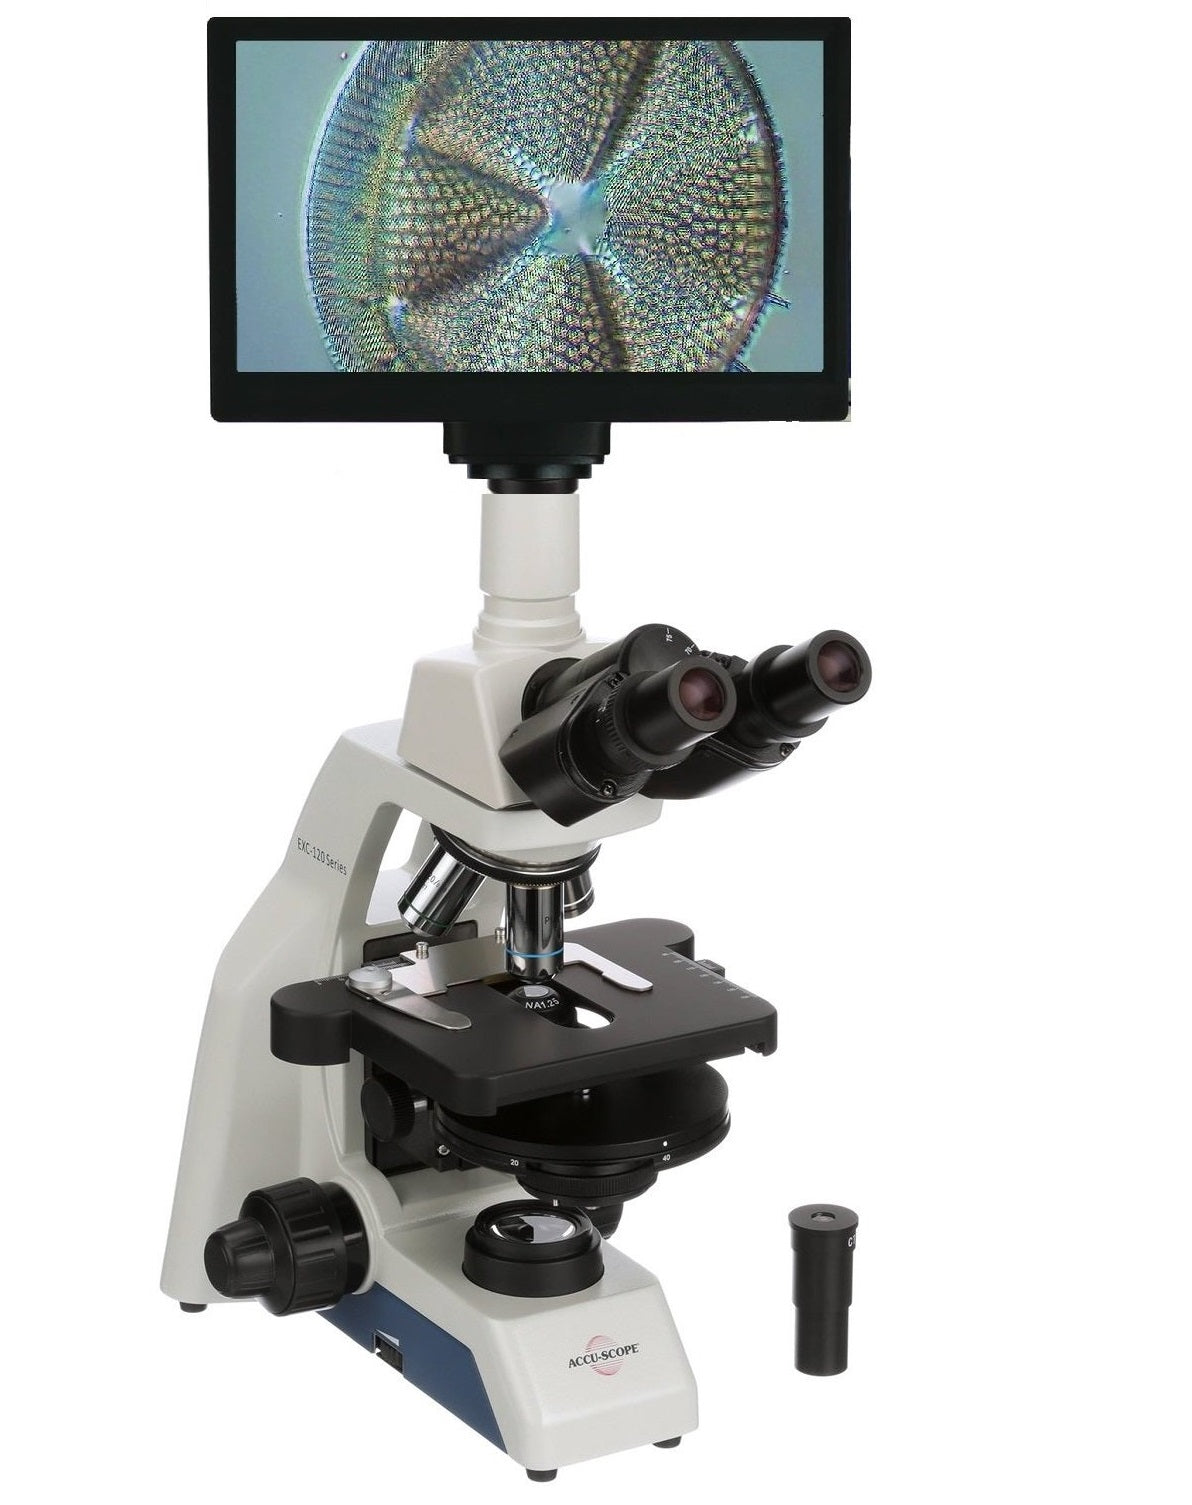 Accu-Scope EXC-120 Phase Contrast Digital Microscope